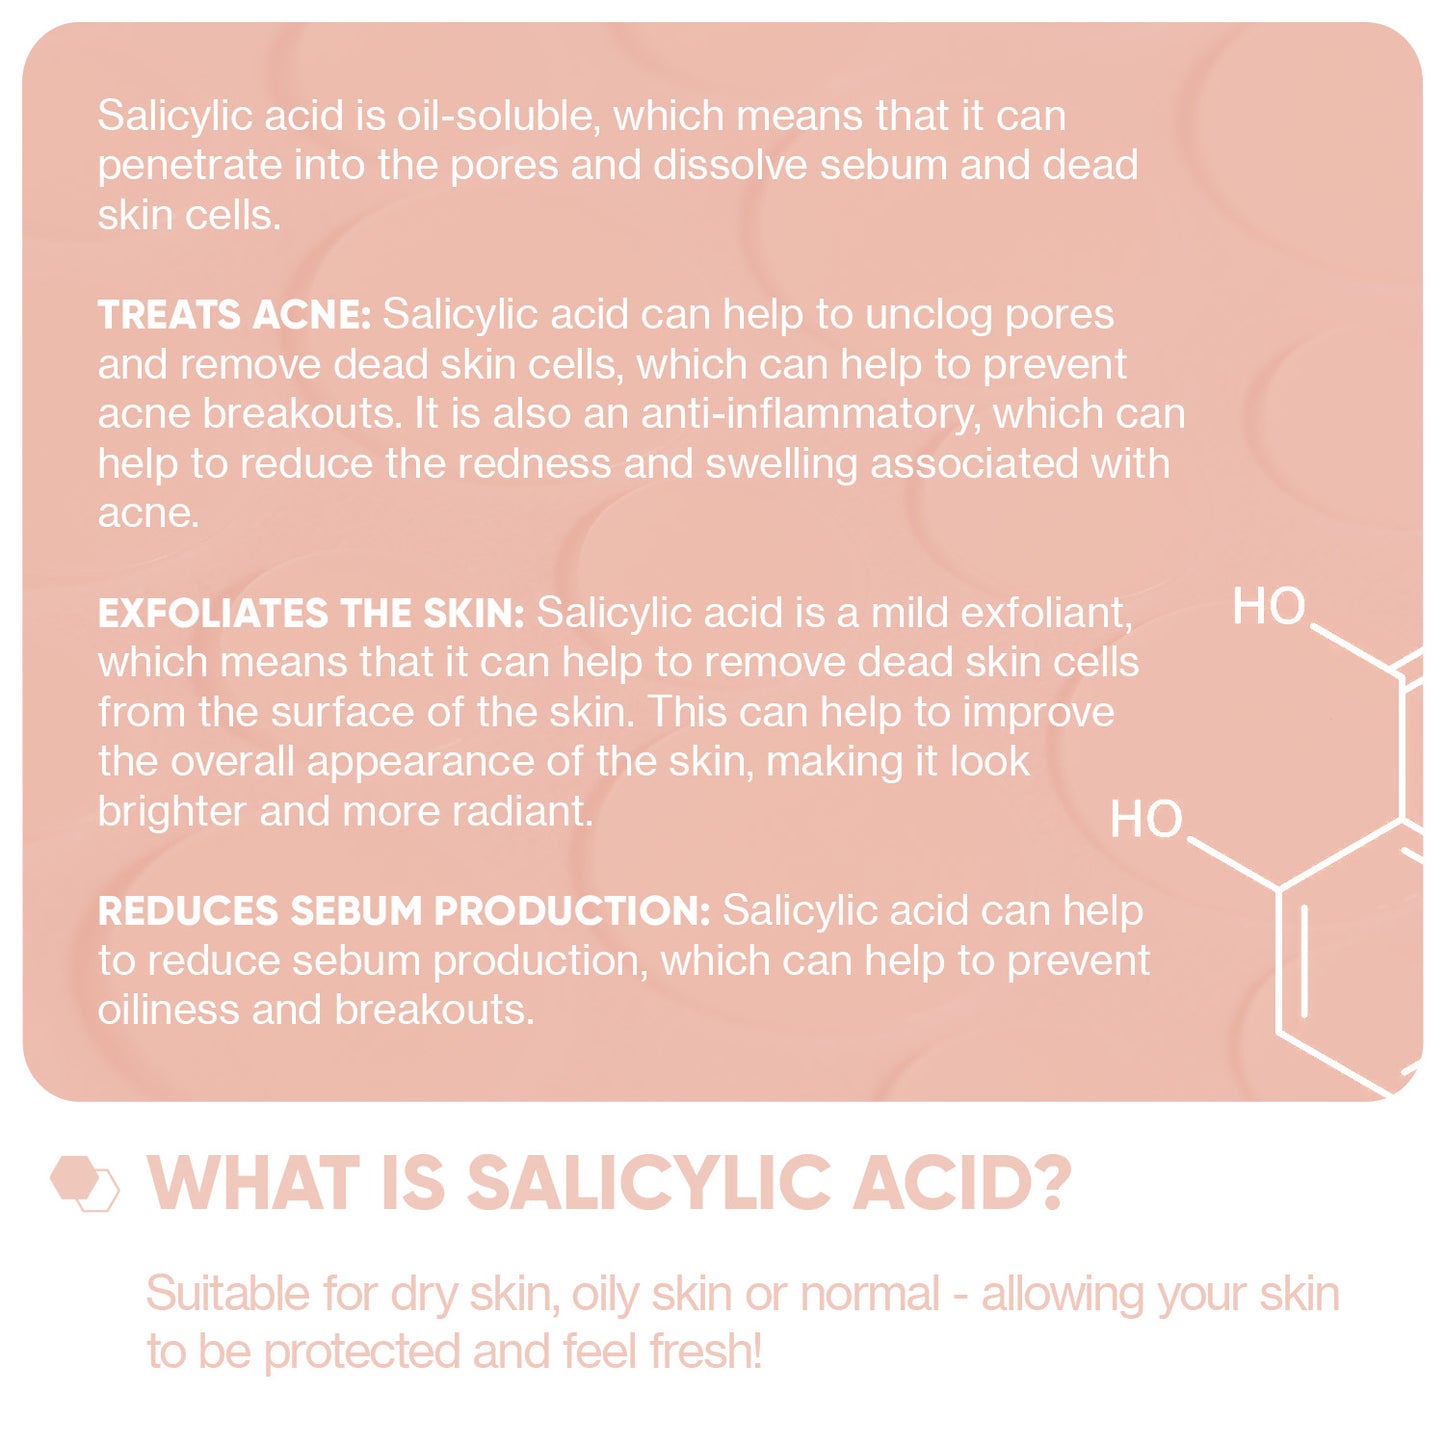 Emergency Dots with Salicylic Acid (Buy 2 + 1 free Bundle)